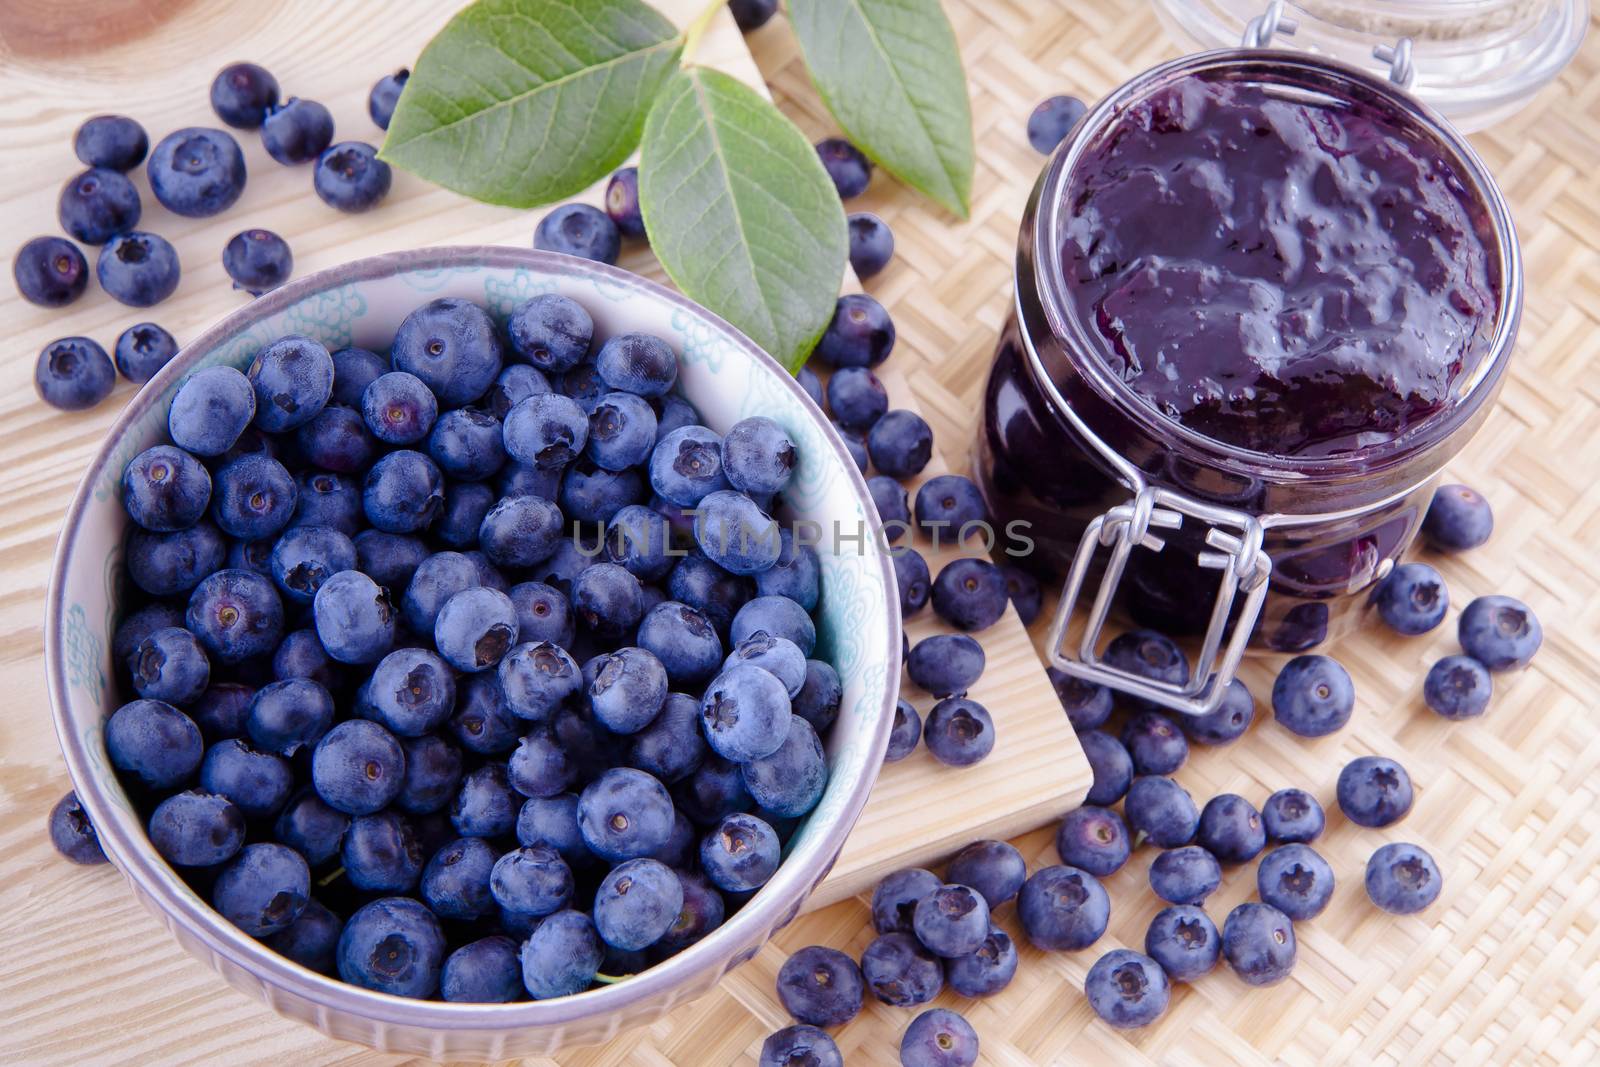 Jam of blueberries fruits by Gbuglok